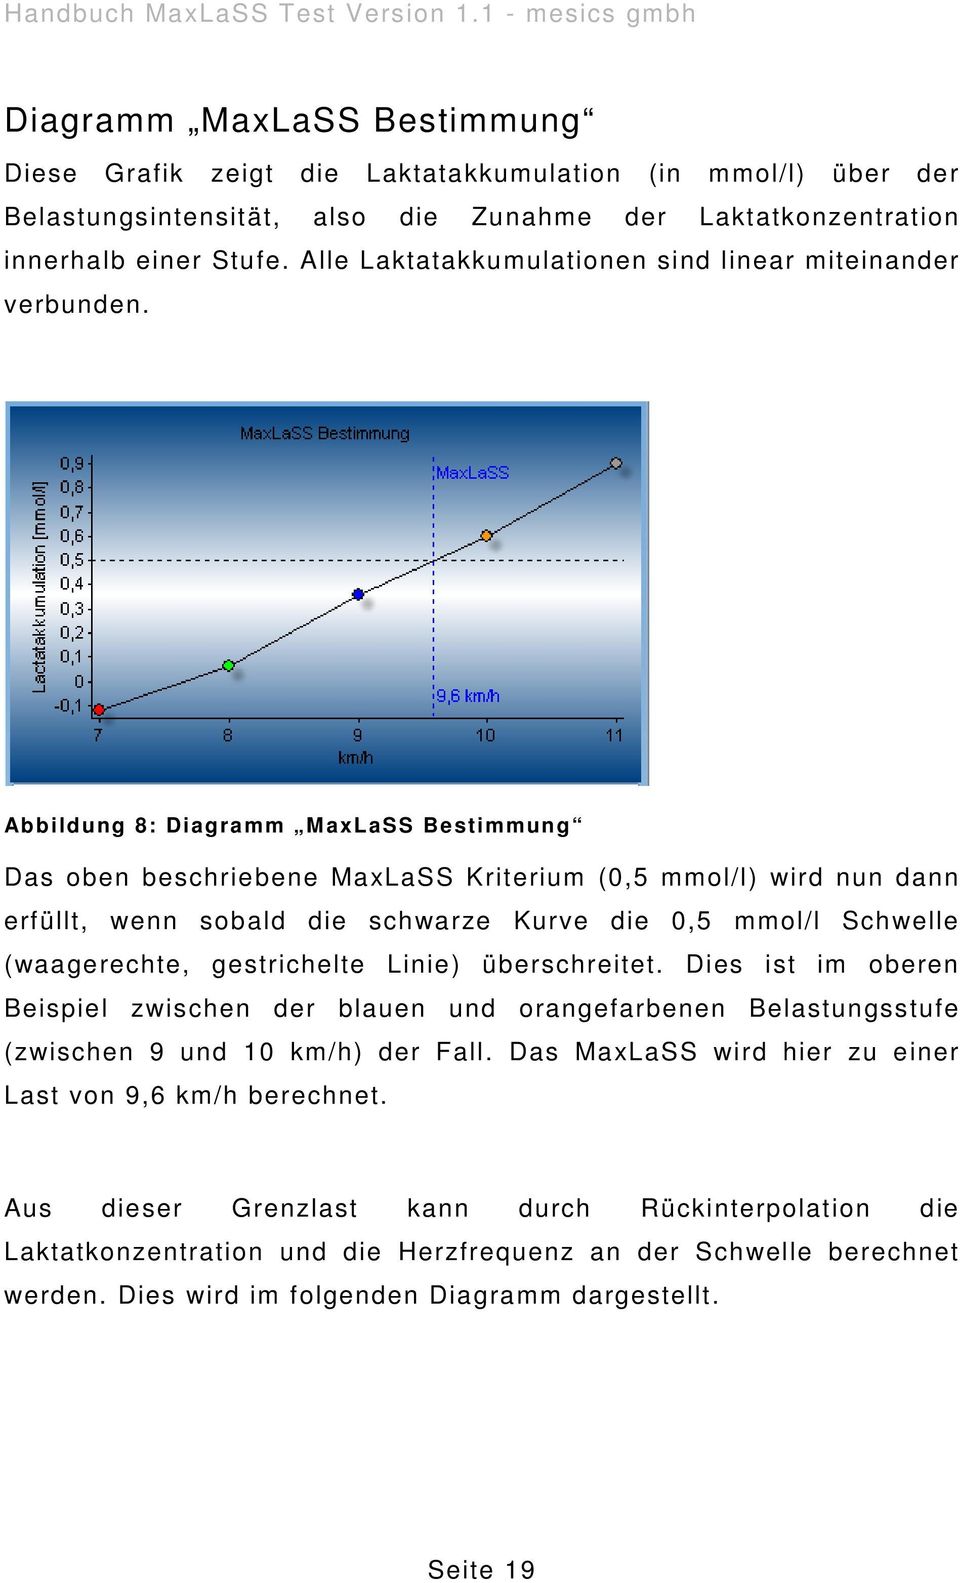 Abbildung 8: Diagramm MaxLaSS Bestimmung Das oben beschriebene MaxLaSS Kriterium (0,5 mmol/l) wird nun dann erfüllt, wenn sobald die schwarze Kurve die 0,5 mmol/l Schwelle (waagerechte, gestrichelte